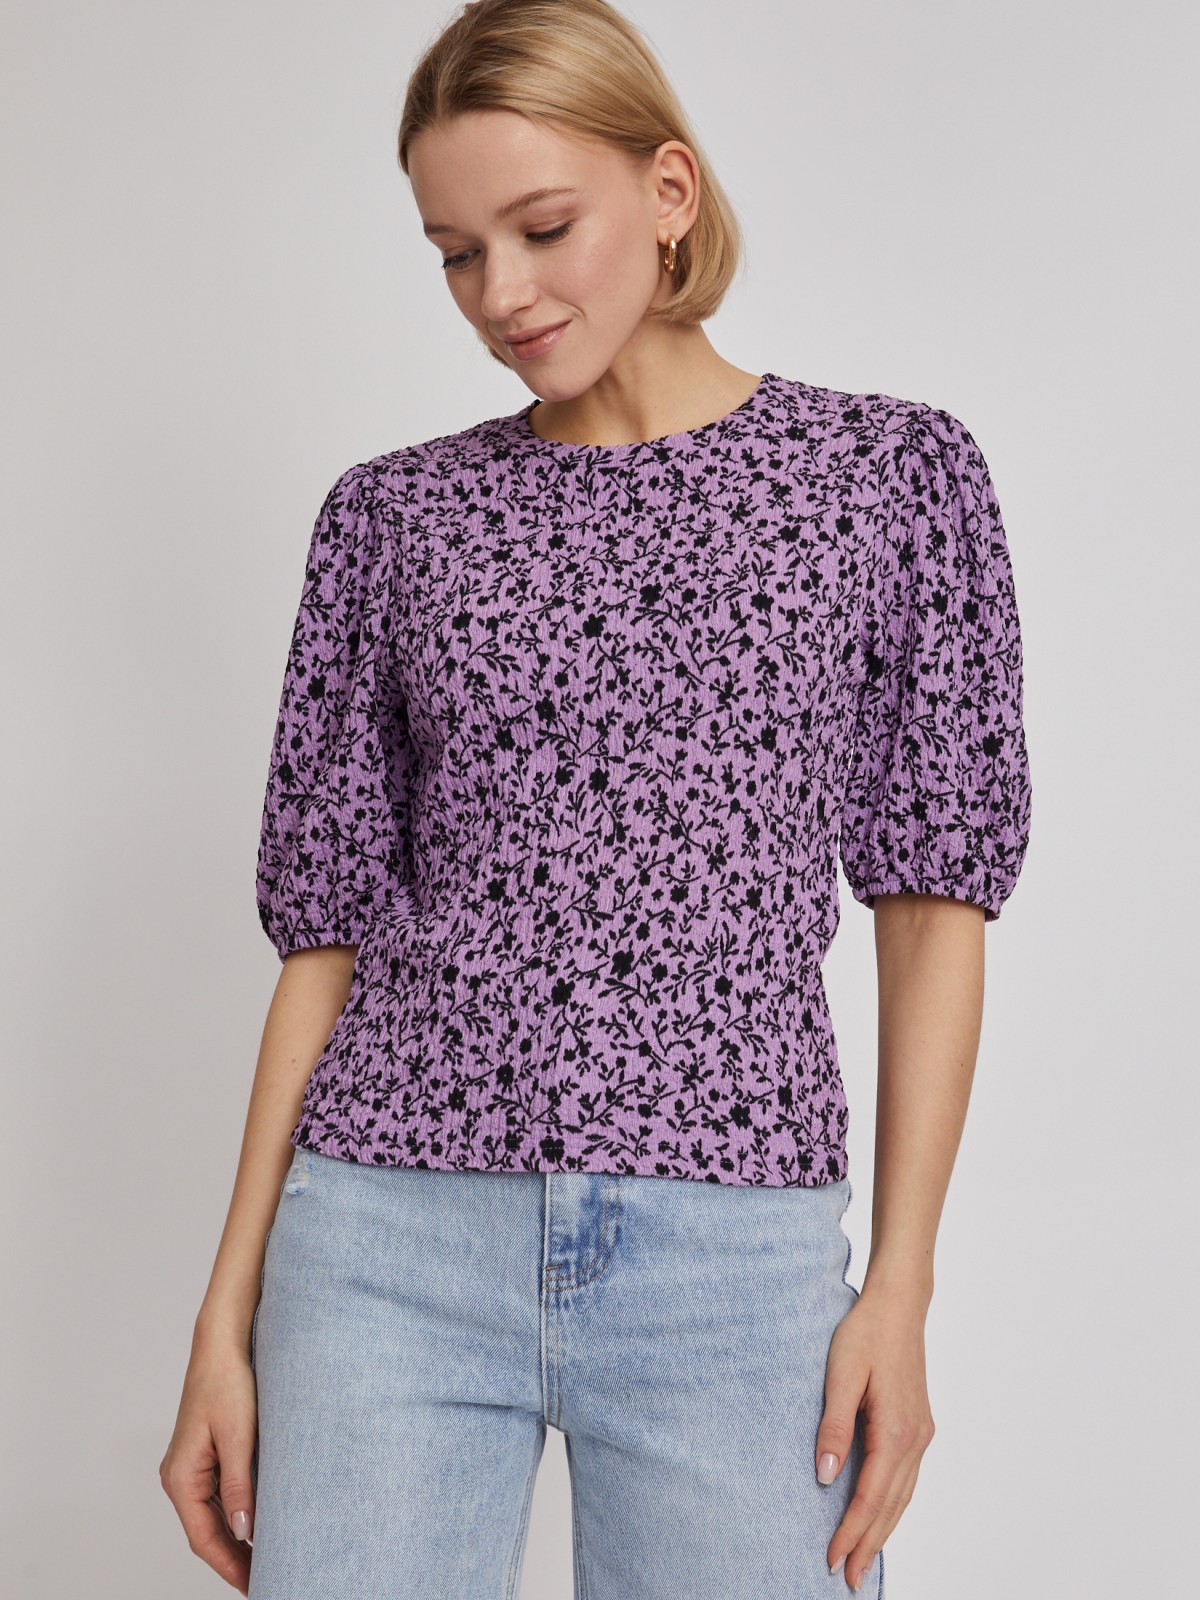 Топ-блузка с коротким рукавом zolla 02321122L041, цвет лиловый, размер XS - фото 4